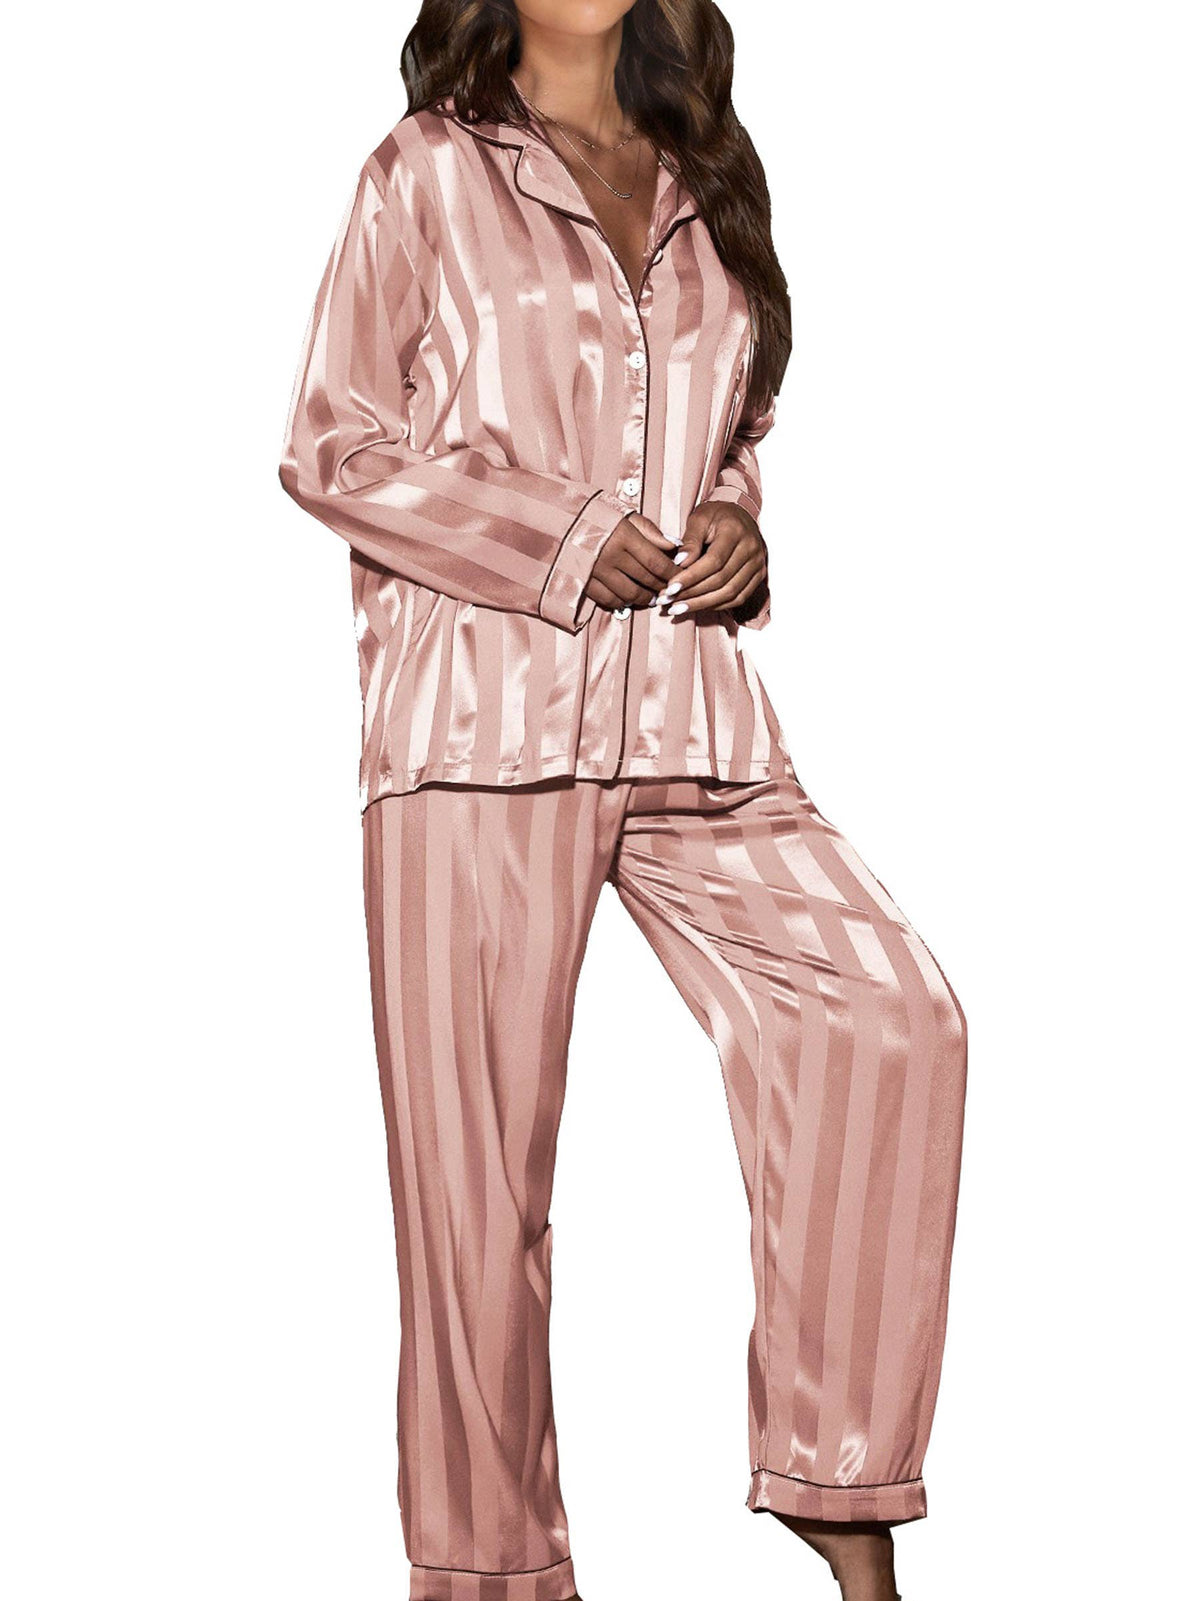 2 Piece Button Front Sleepwear Pants Set Loungewear: S / Pink